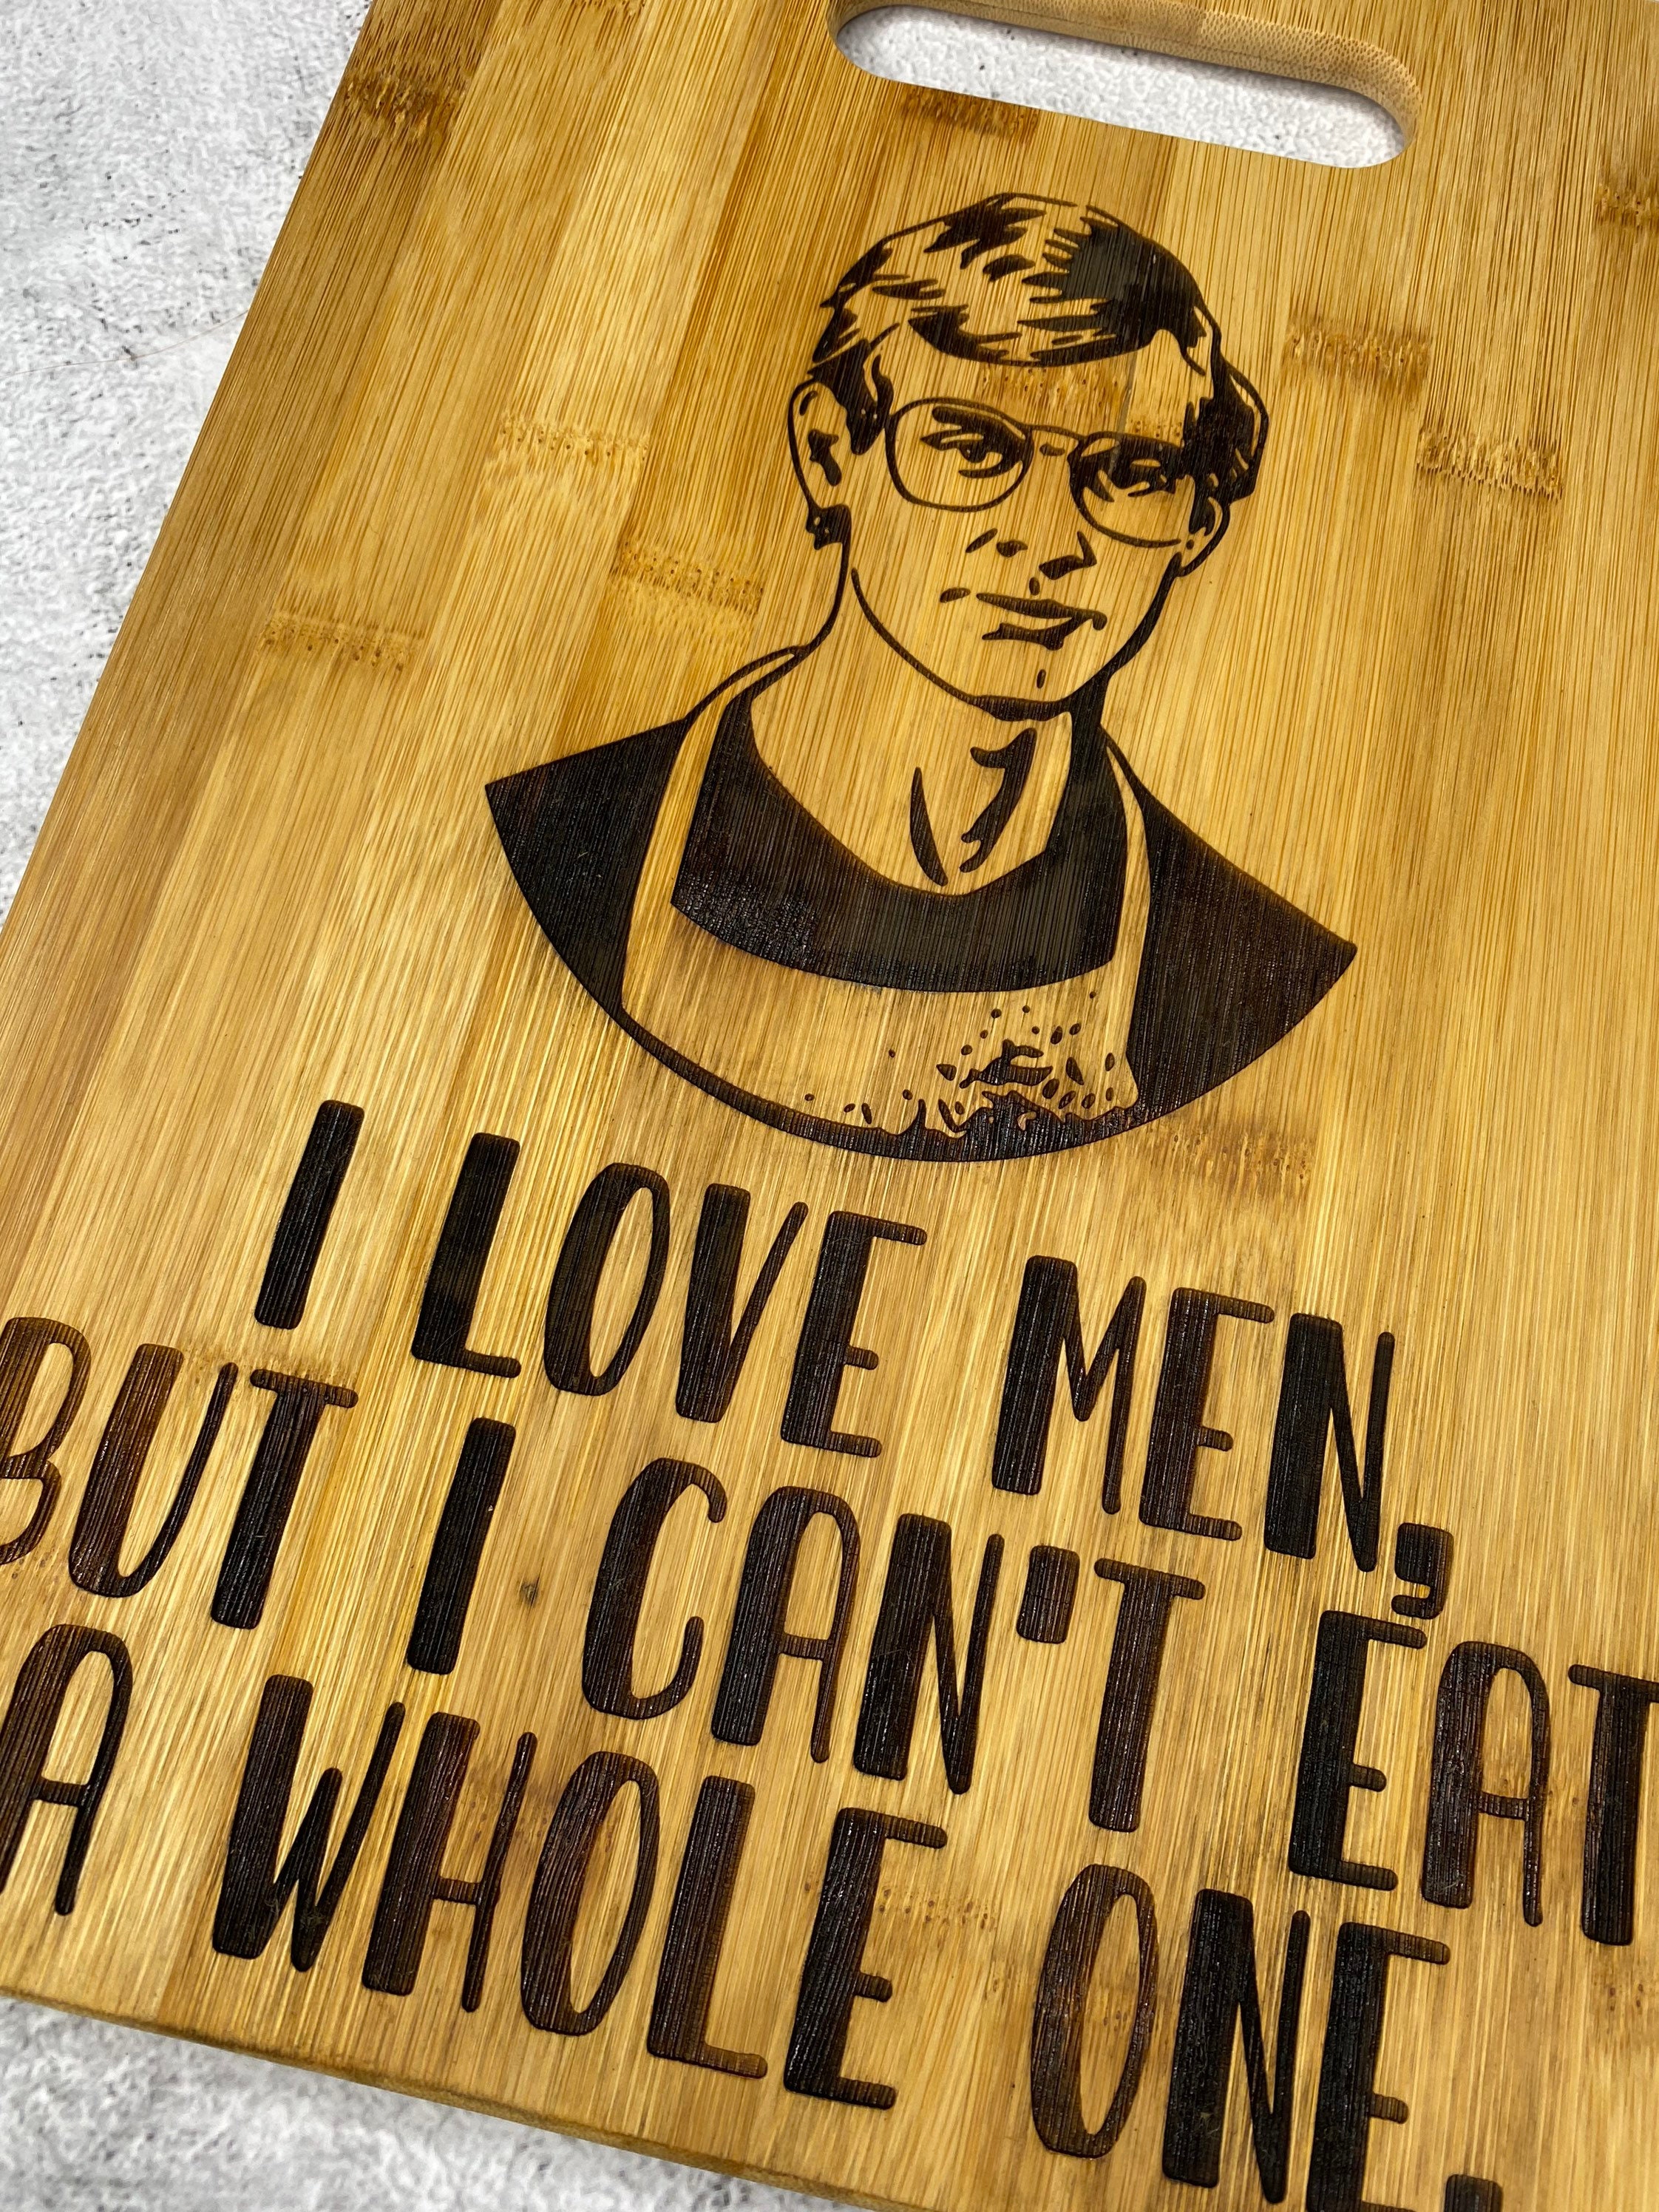 Jeffrey Dahmer Cutting Board I Love Men but I Cant